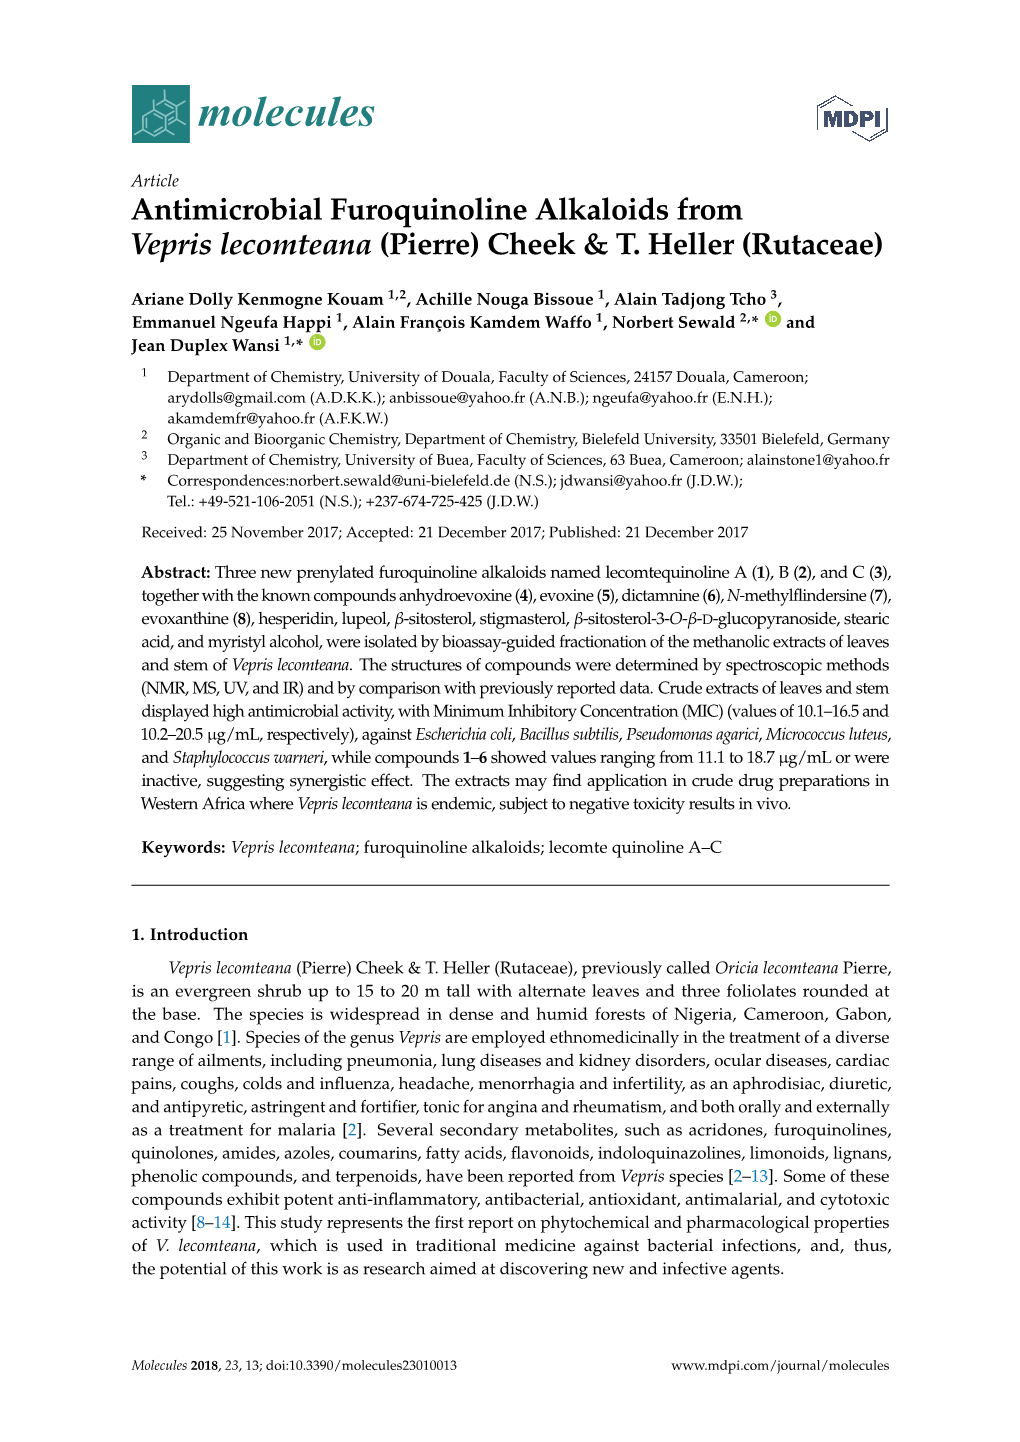 Antimicrobial Furoquinoline Alkaloids from Vepris Lecomteana (Pierre) Cheek & T. Heller (Rutaceae)